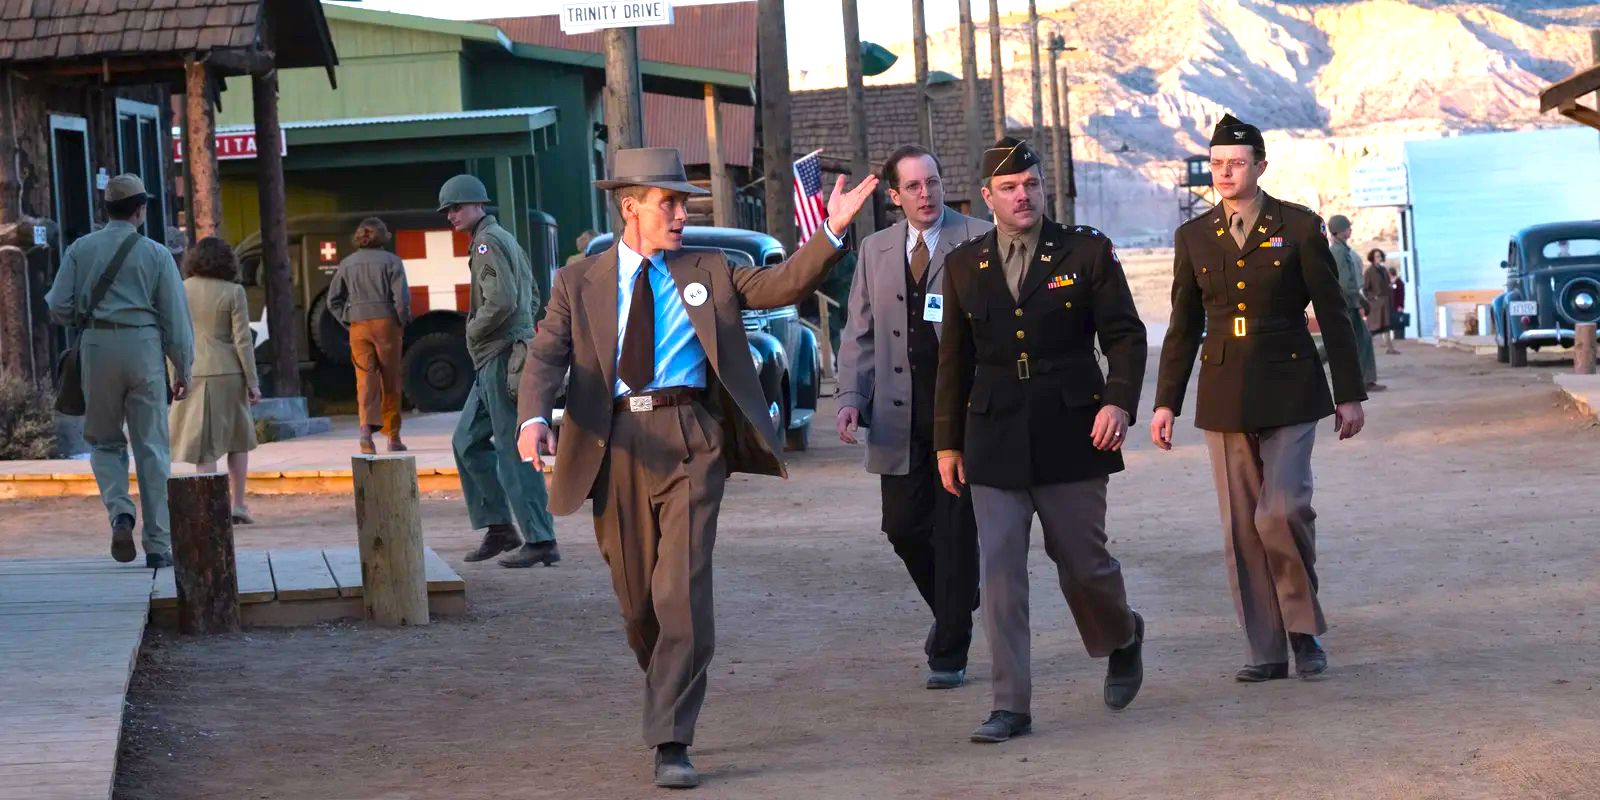 Cillian Murphy and Matt Damon in Oppenheimer touring Los Alamos